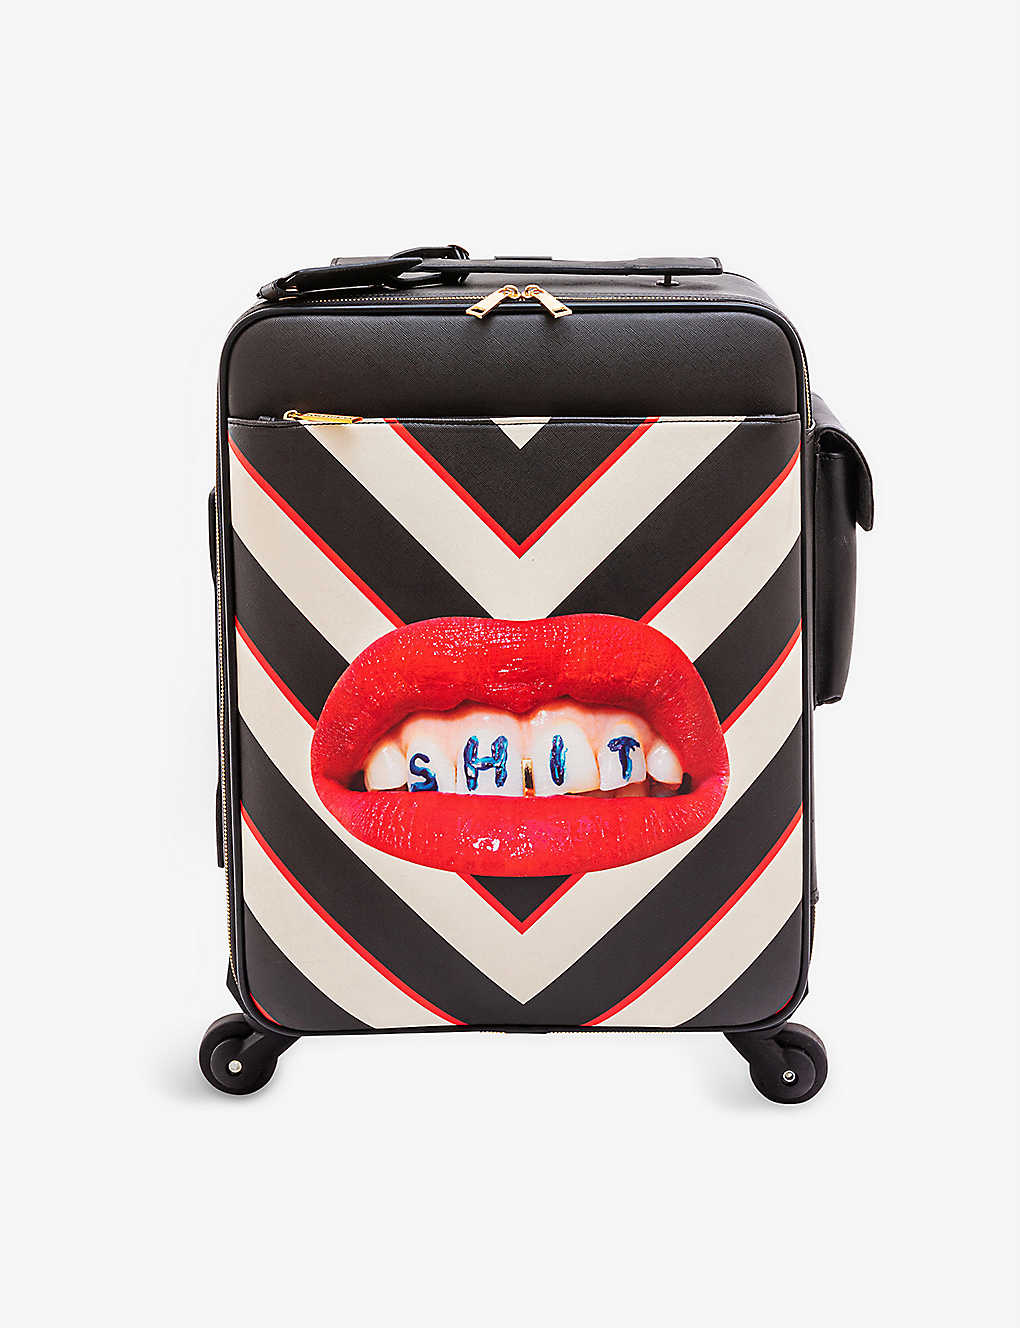 Shop Seletti Wears Toiletpaper Lipstick-print Striped Faux-leather Suitcase